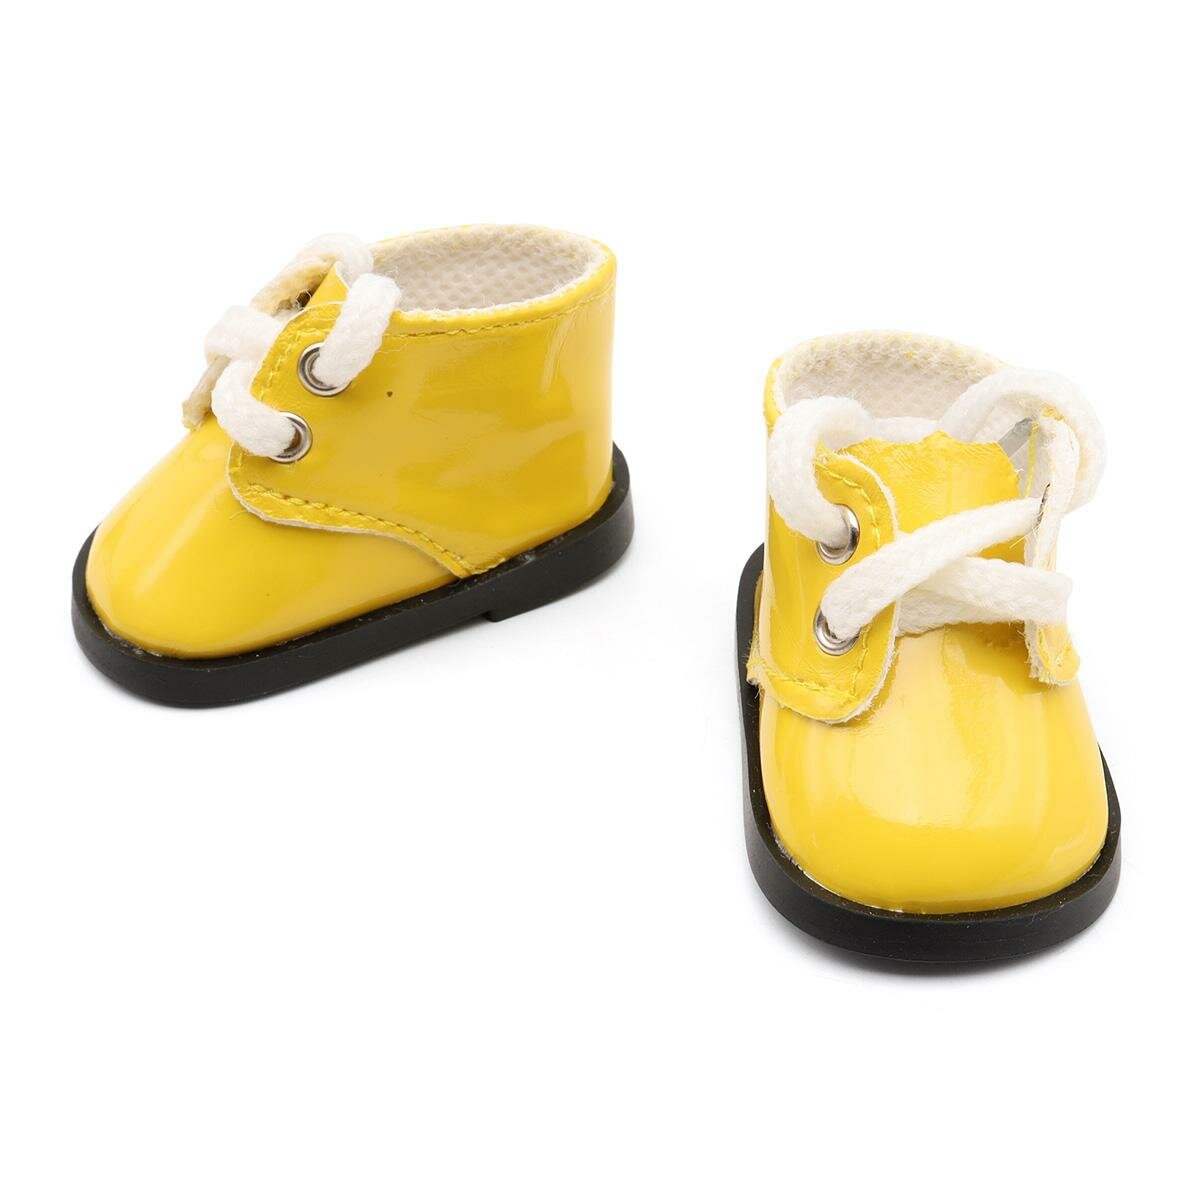 Ботиночки для кукол Astra&Craft Желтые, 1 пара, SH-0063